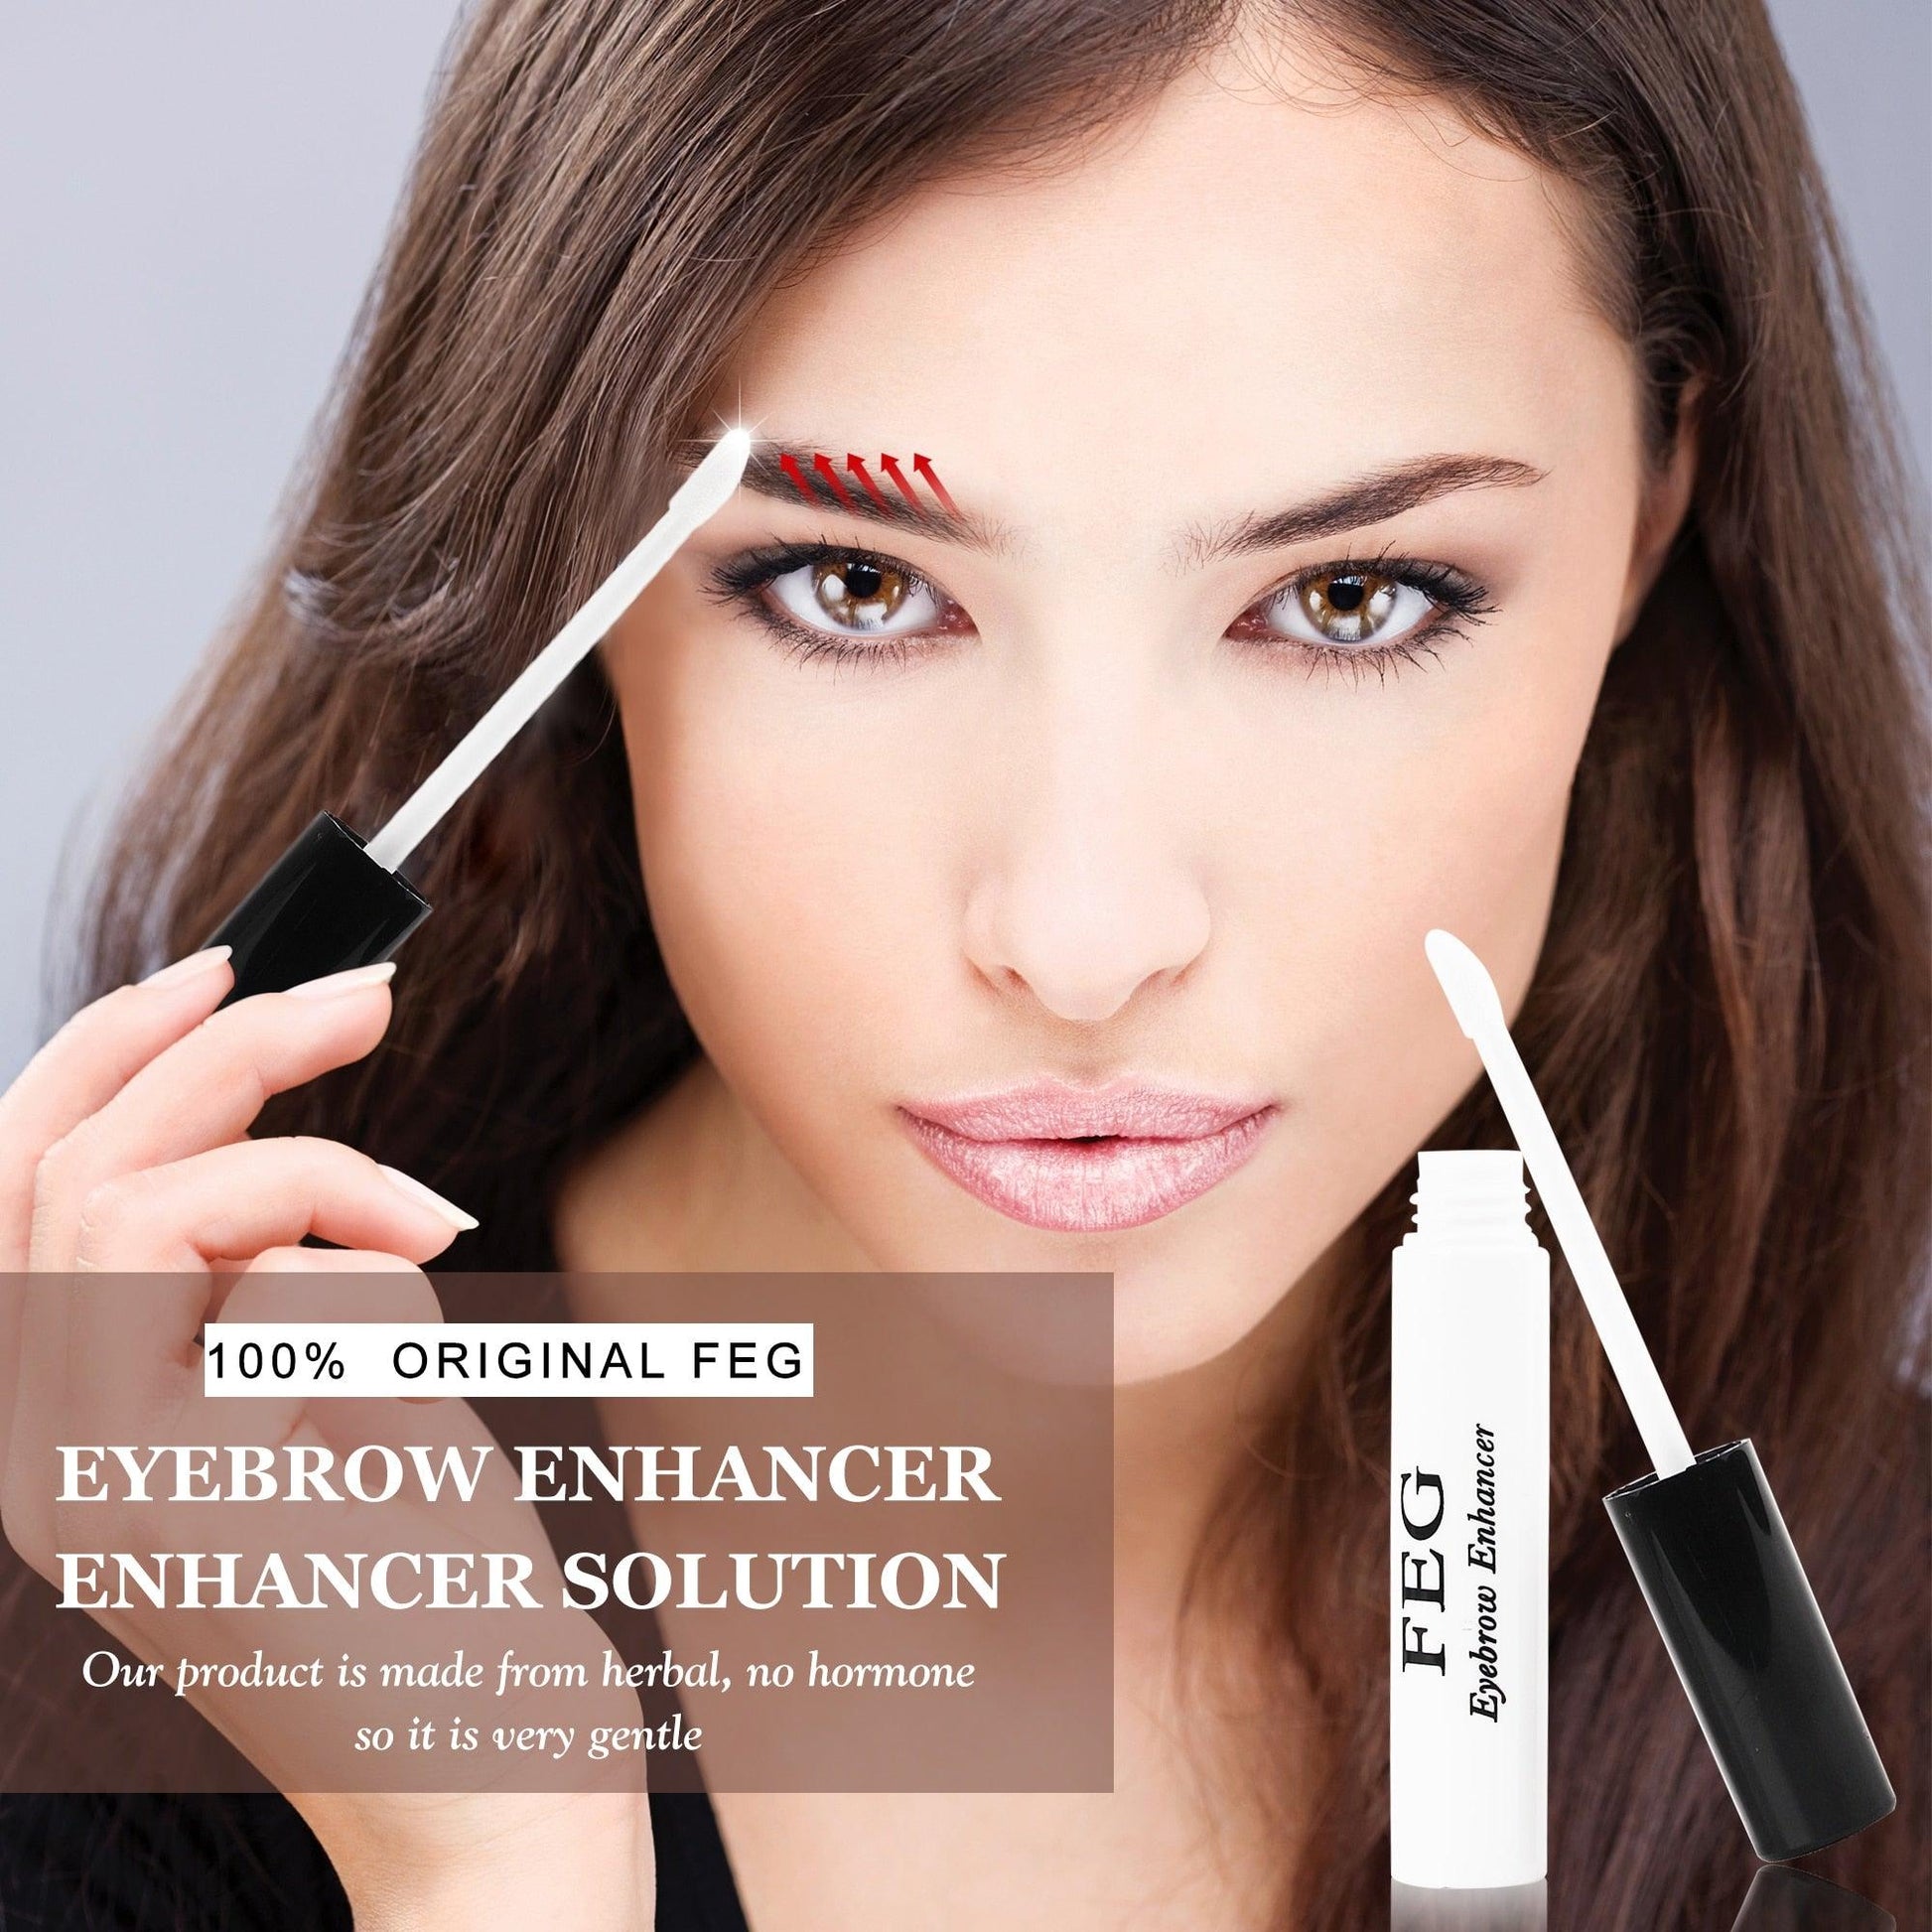 Eyebrows Growth Serum Eyebrow Beauty Enhancer Eye Lash liquid Treatment Longer Thicker Blacker Eyelash Extension (M2)(1U86)(F86)